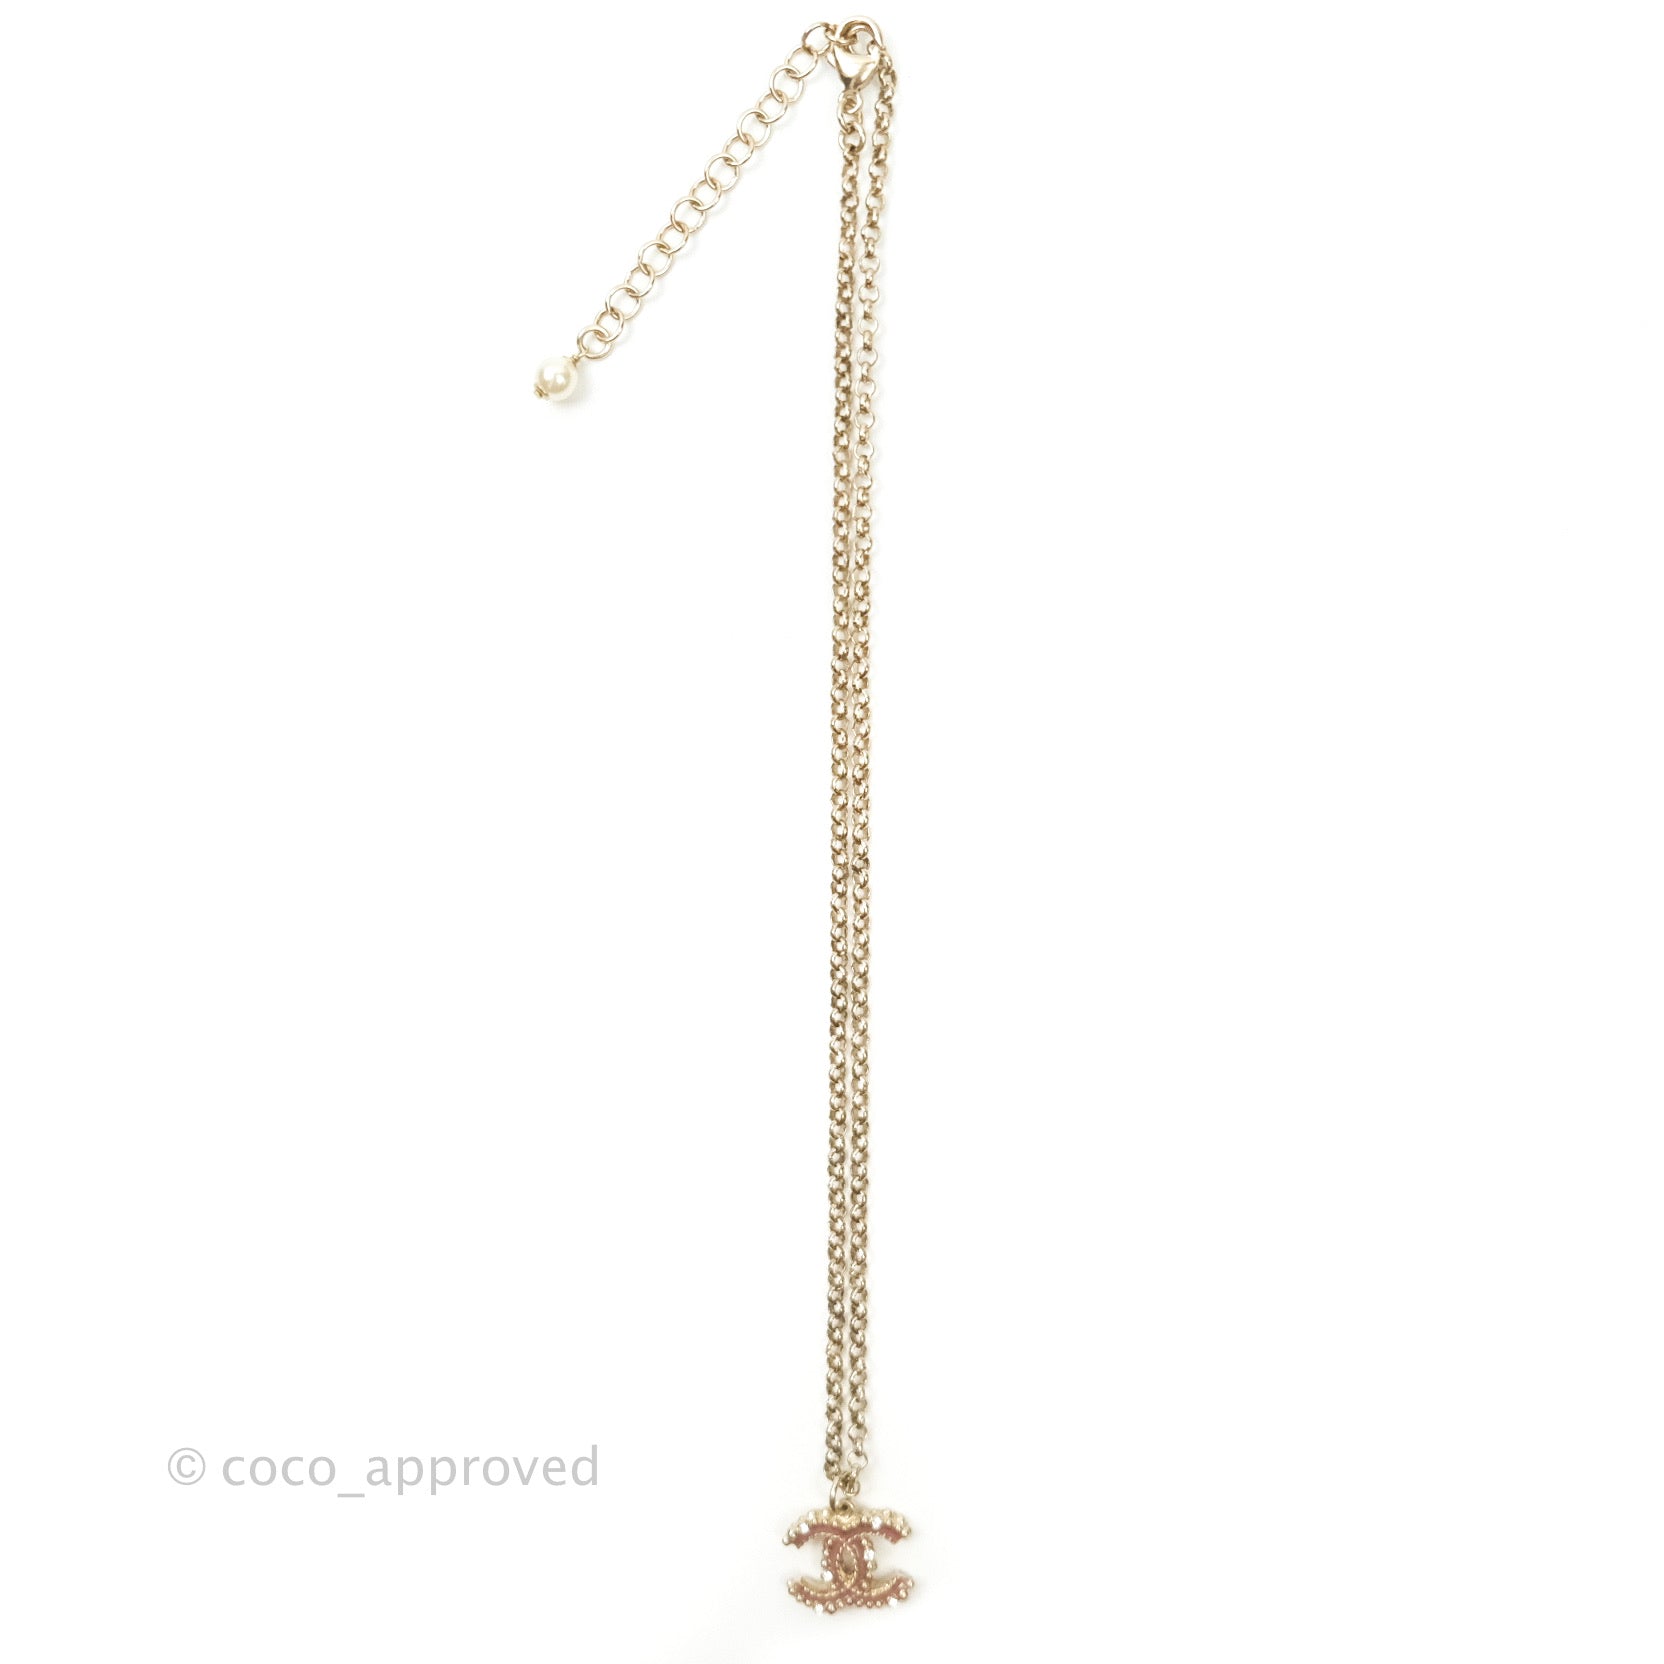 cc chanel necklace